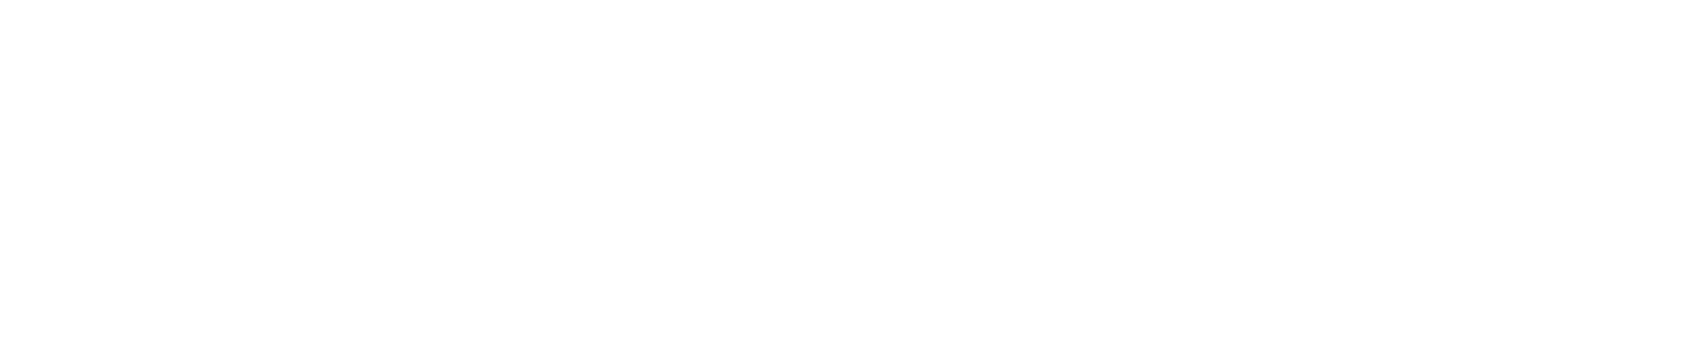 Arons & Solomon Divorce Lawyers - Hackensack, NJ